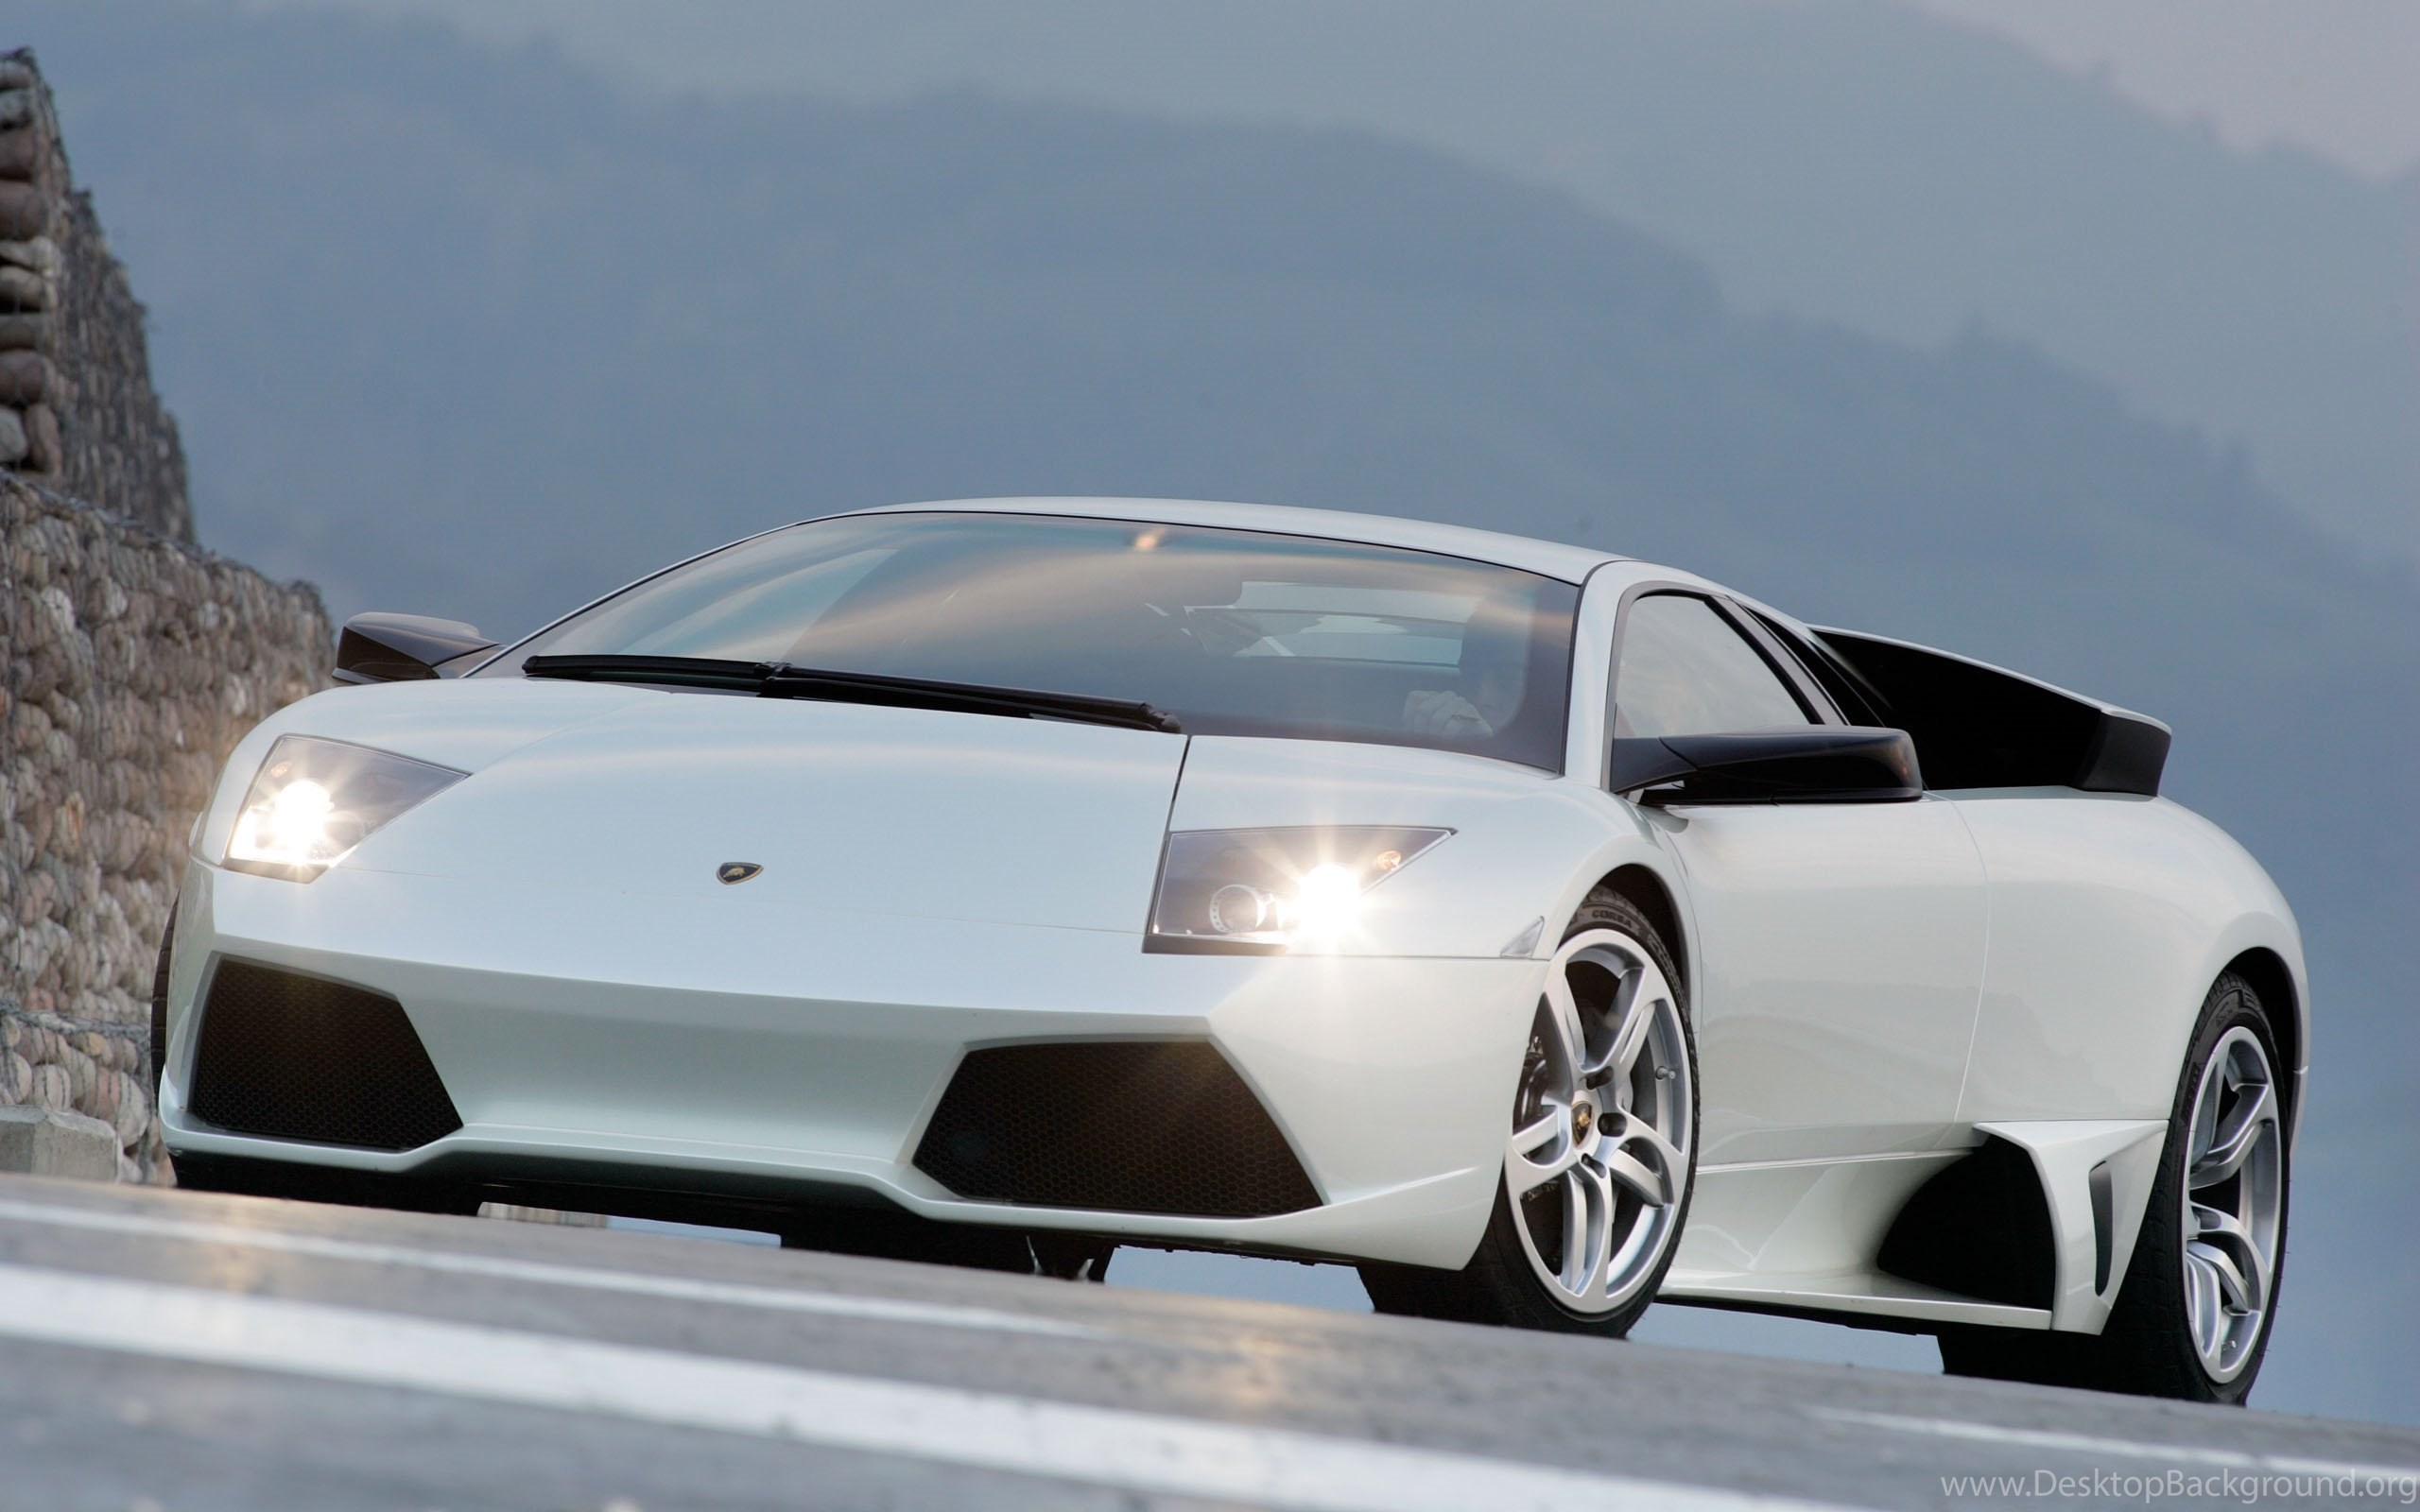 Lamborghini Murcielago Lp640 Car Wallpapers Carswall Net Desktop Images, Photos, Reviews